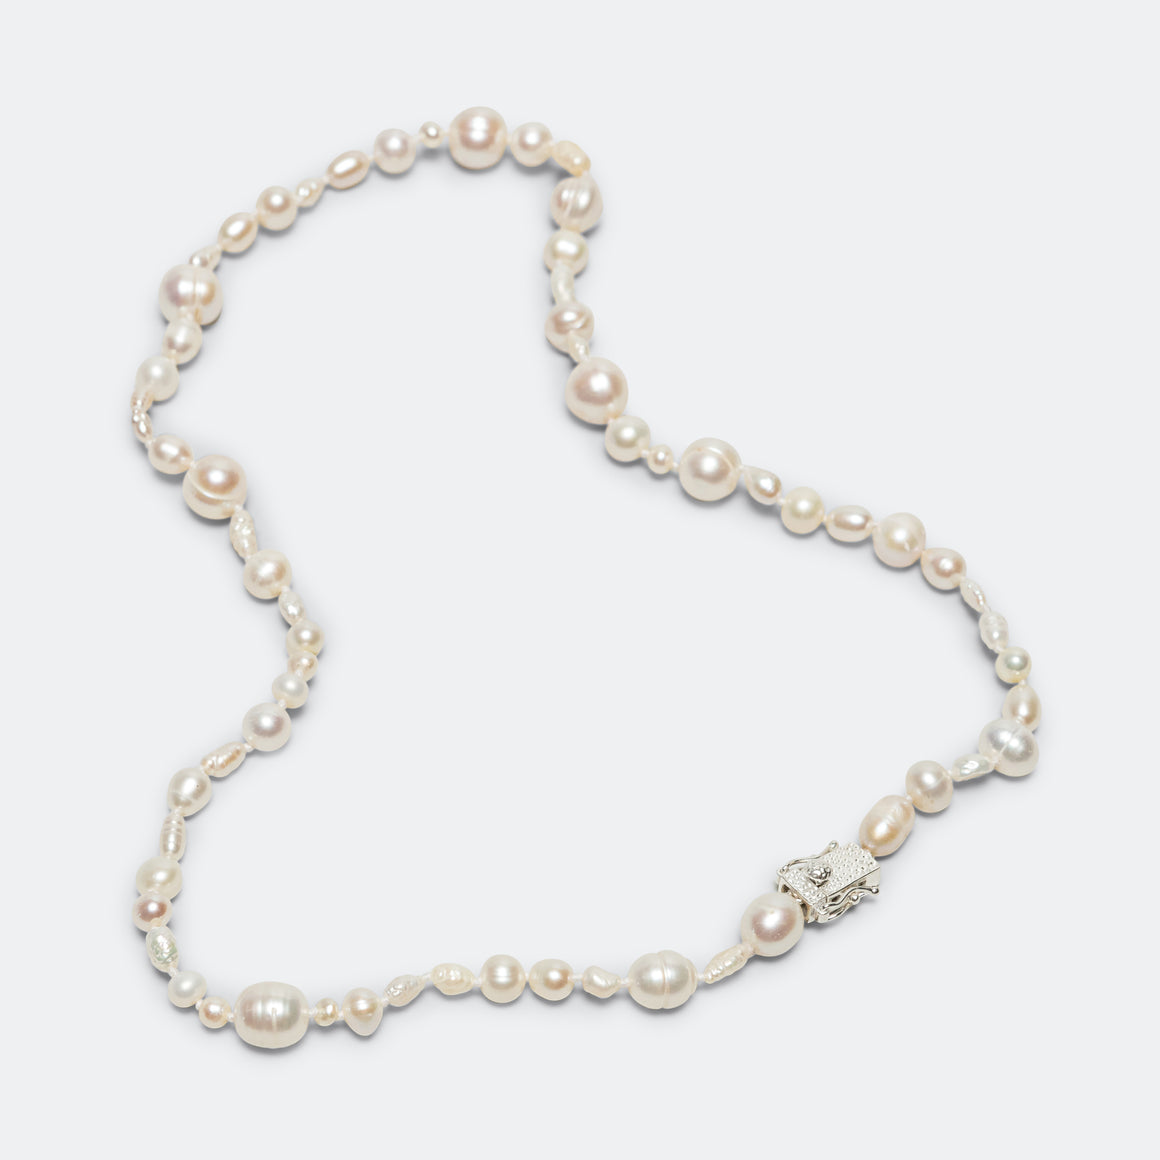 Antique Pearl Necklace